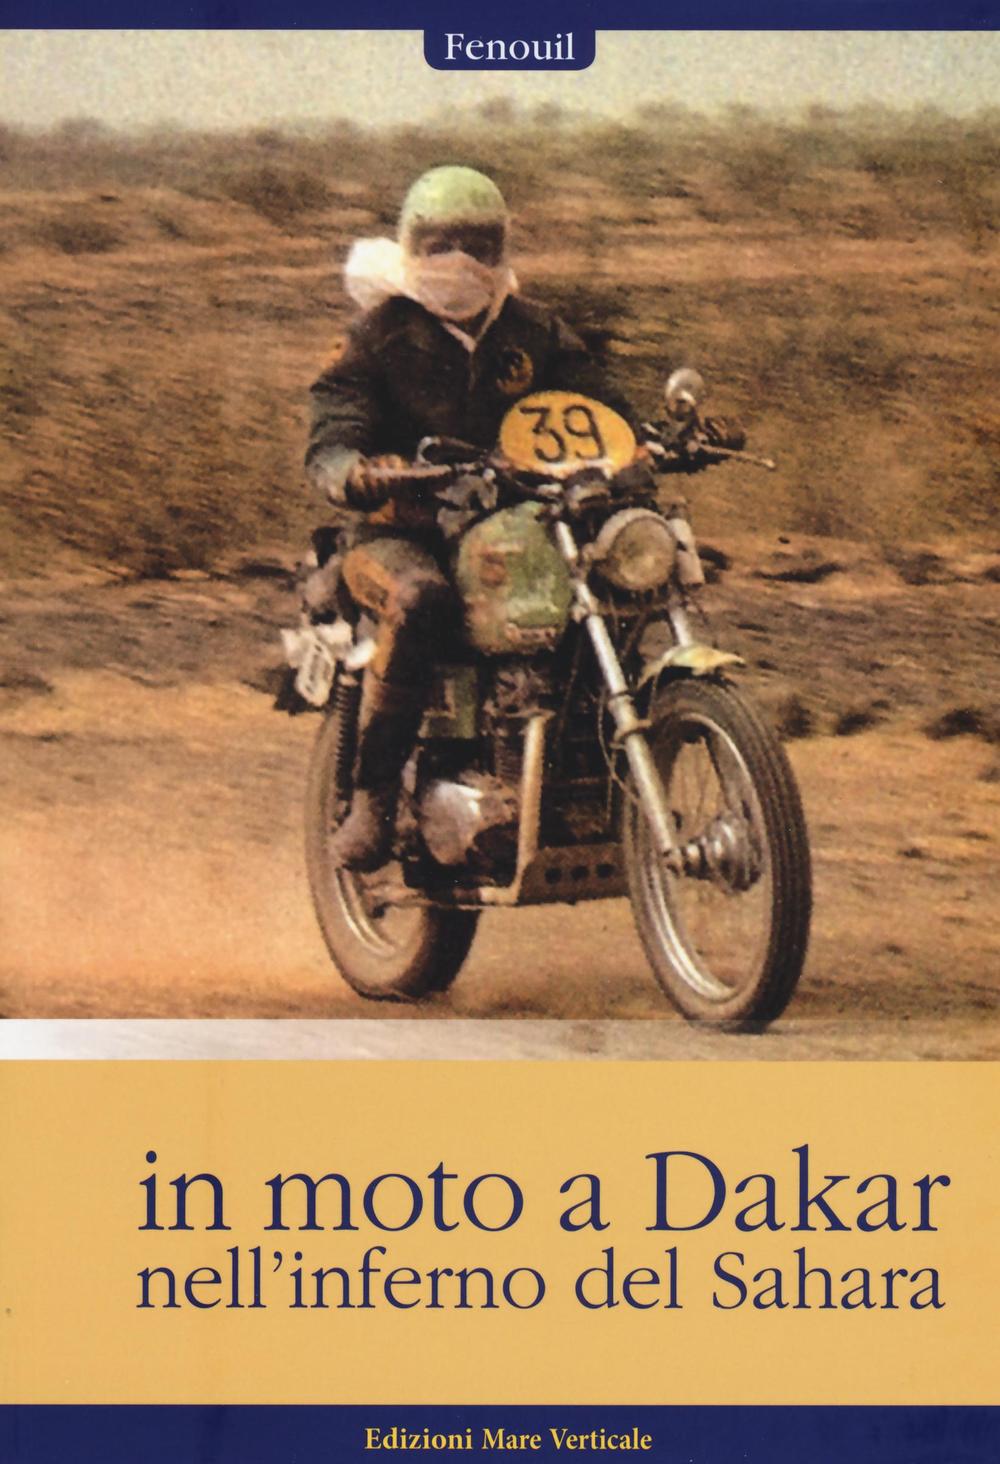 Knjiga In moto a Dakar nell'inferno del Sahara Fenouil